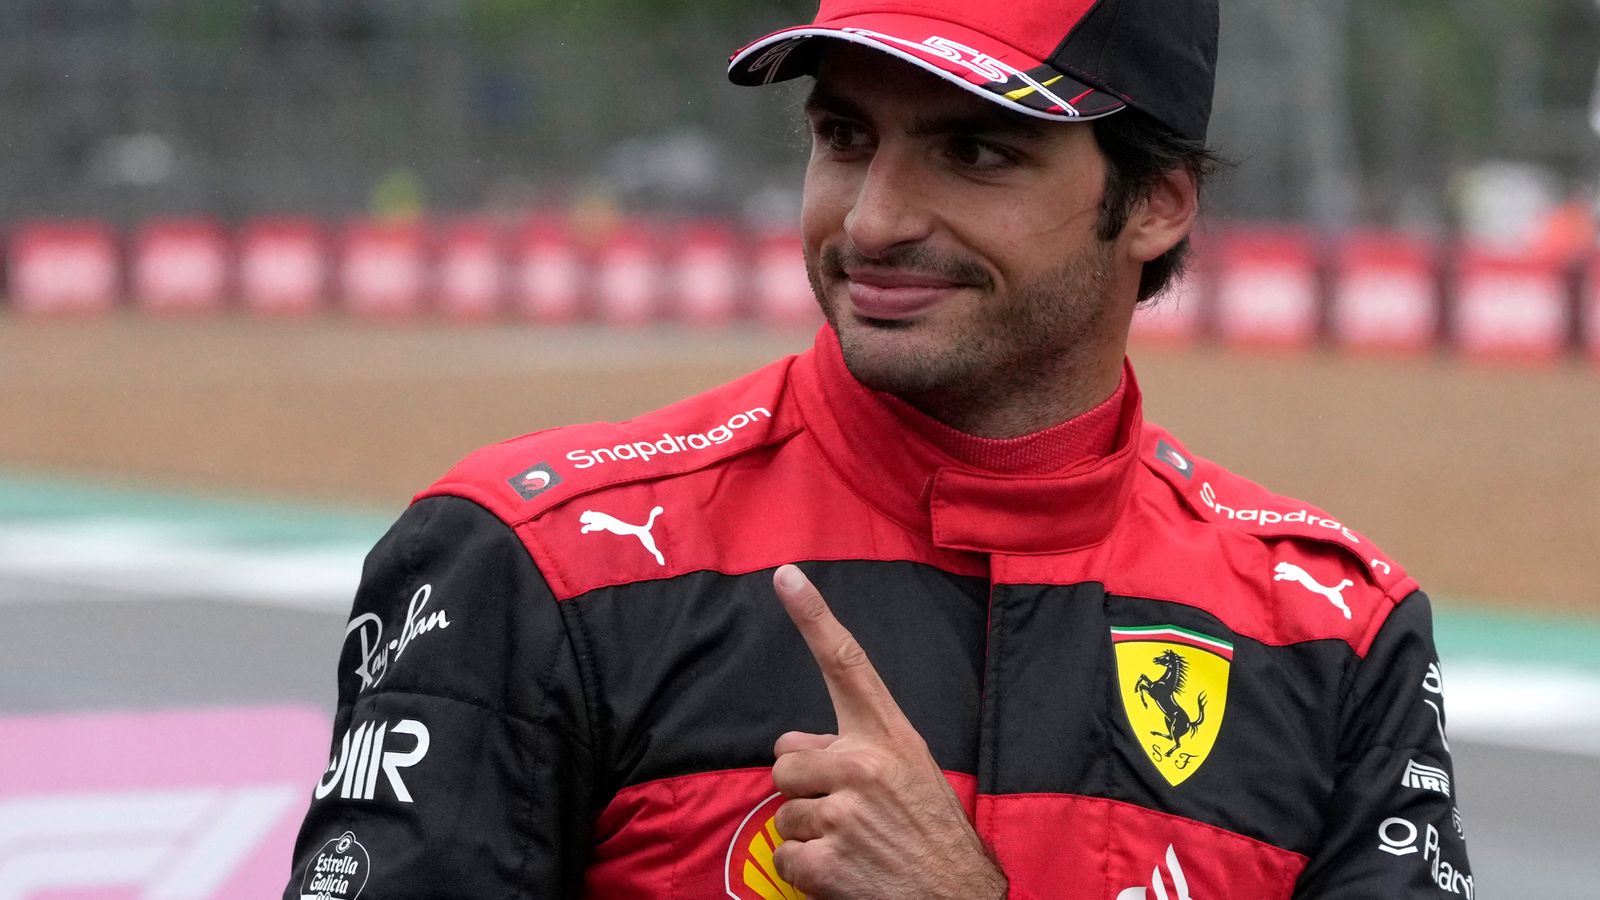 British GP: Carlos Sainz snatches first F1 pole from Max Verstappen in epic wet qualifying